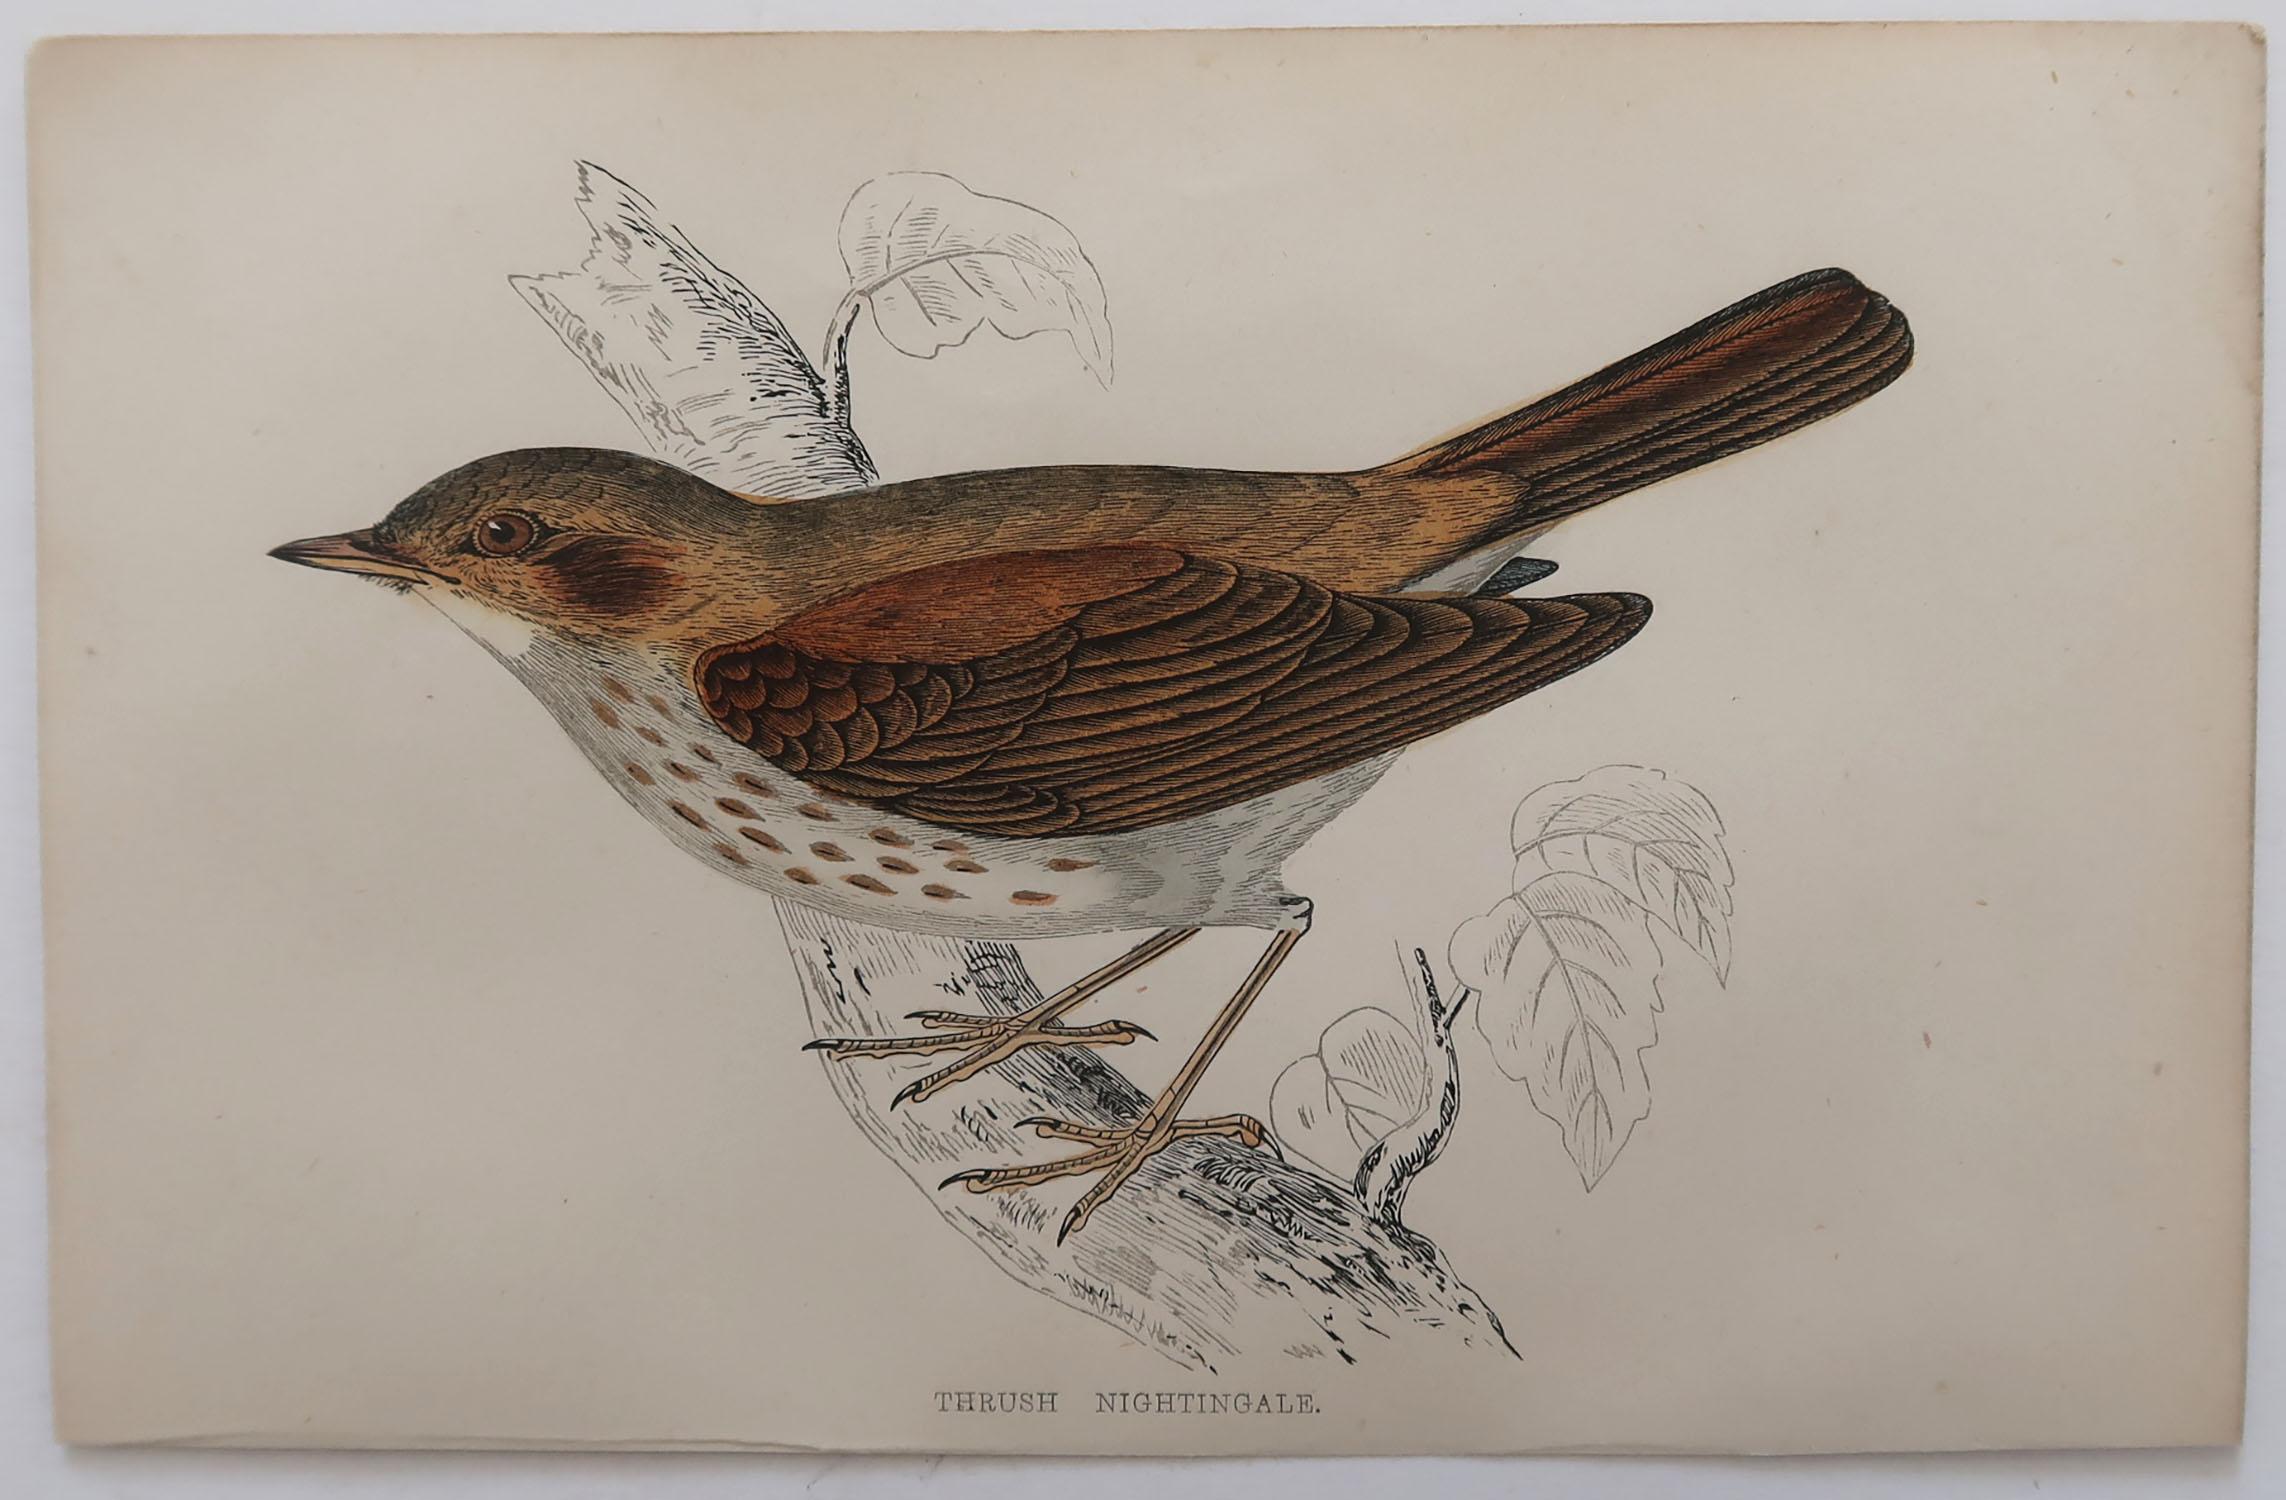 Folk Art Original Antique Bird Print, the Thrush Nightingale, circa 1870